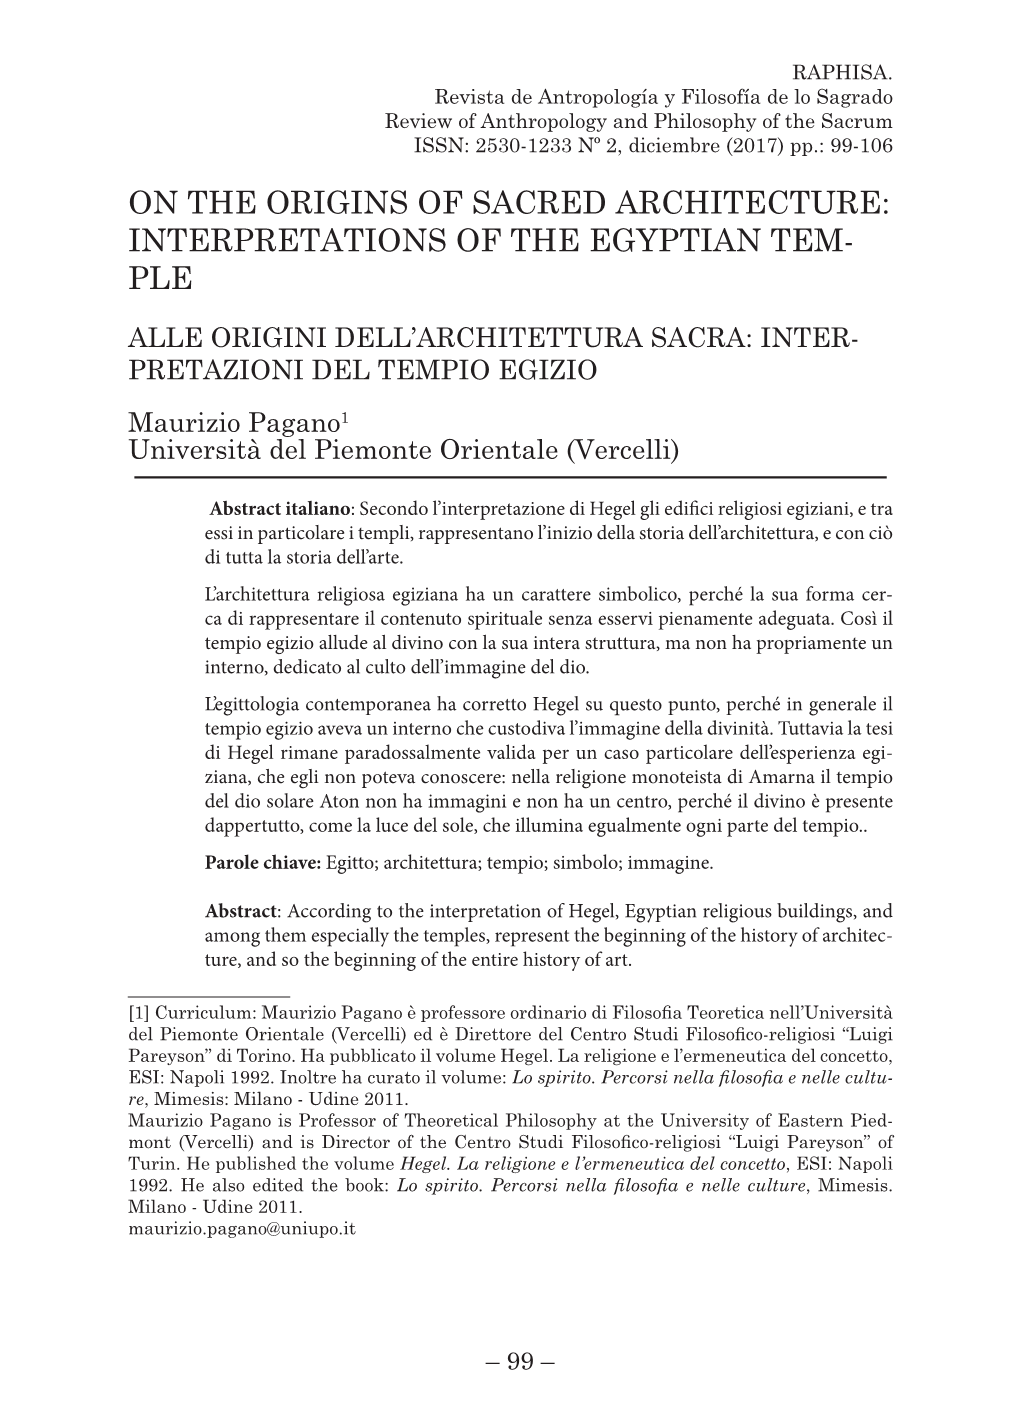 On the Origins of Sacred Architecture: Interpretations of the Egyptian Tem- Ple